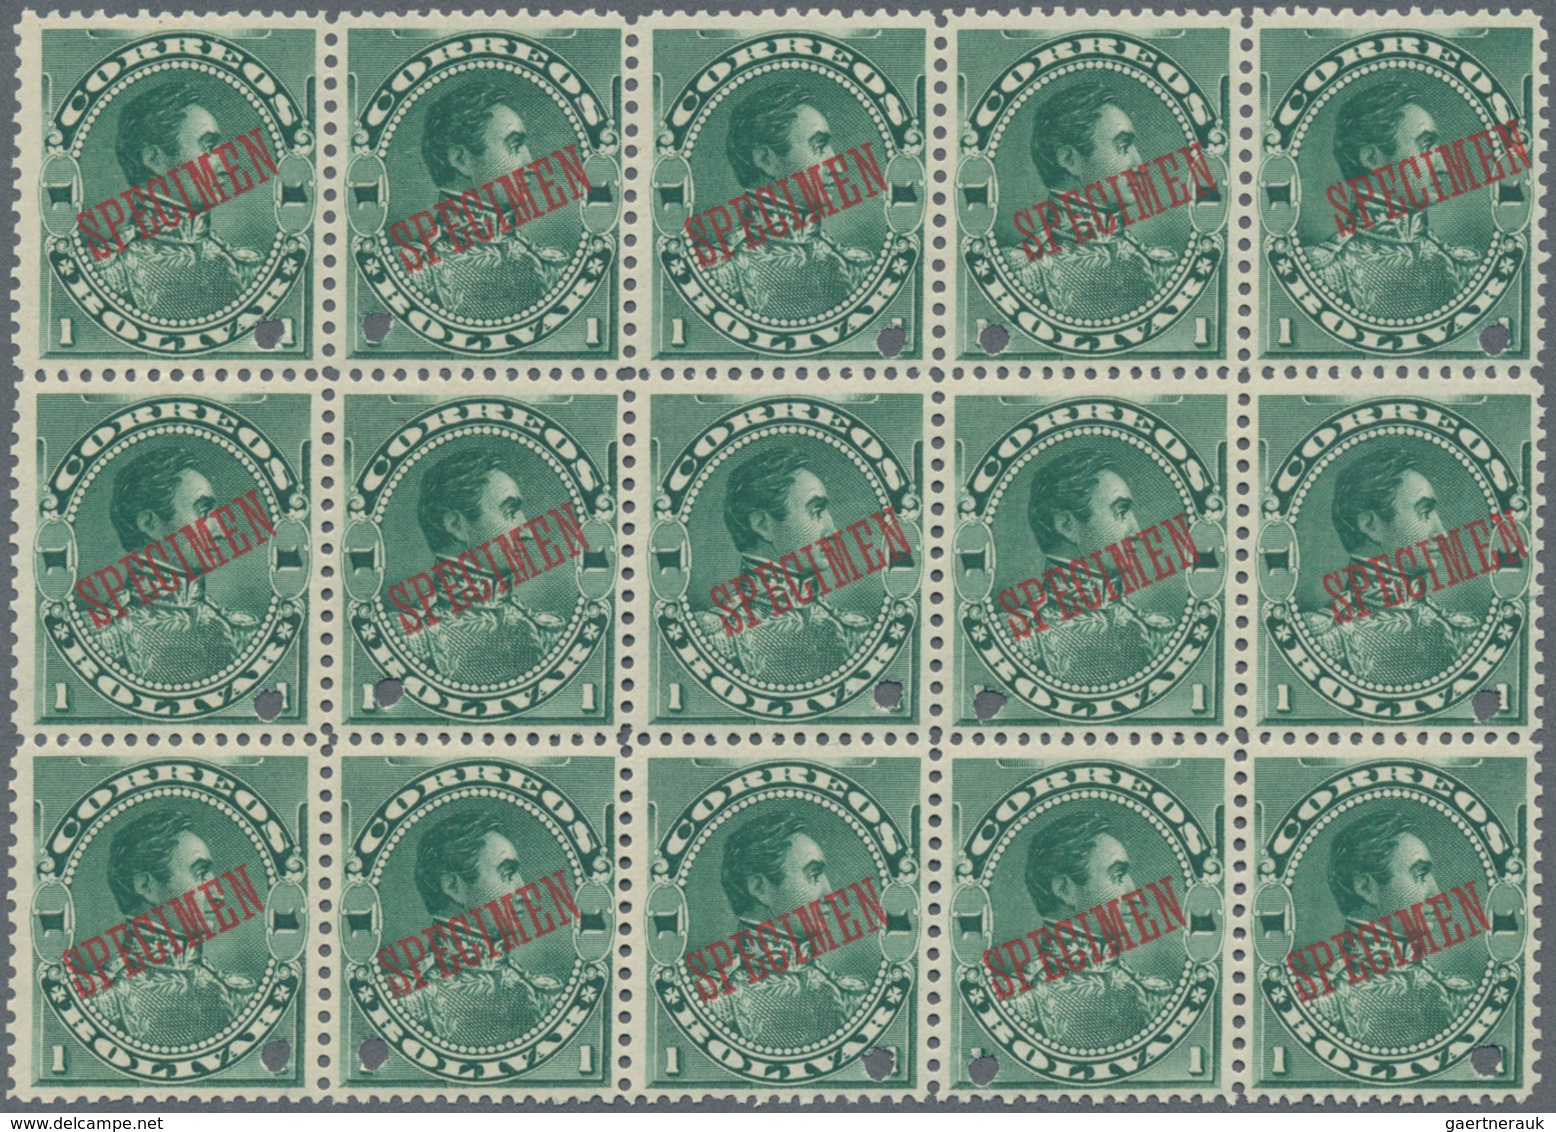 Venezuela: 1893, Definitive Issue 'Simon Bolivar' 1b. Green With Punch Holes And Red Opt. SPECIMEN I - Venezuela